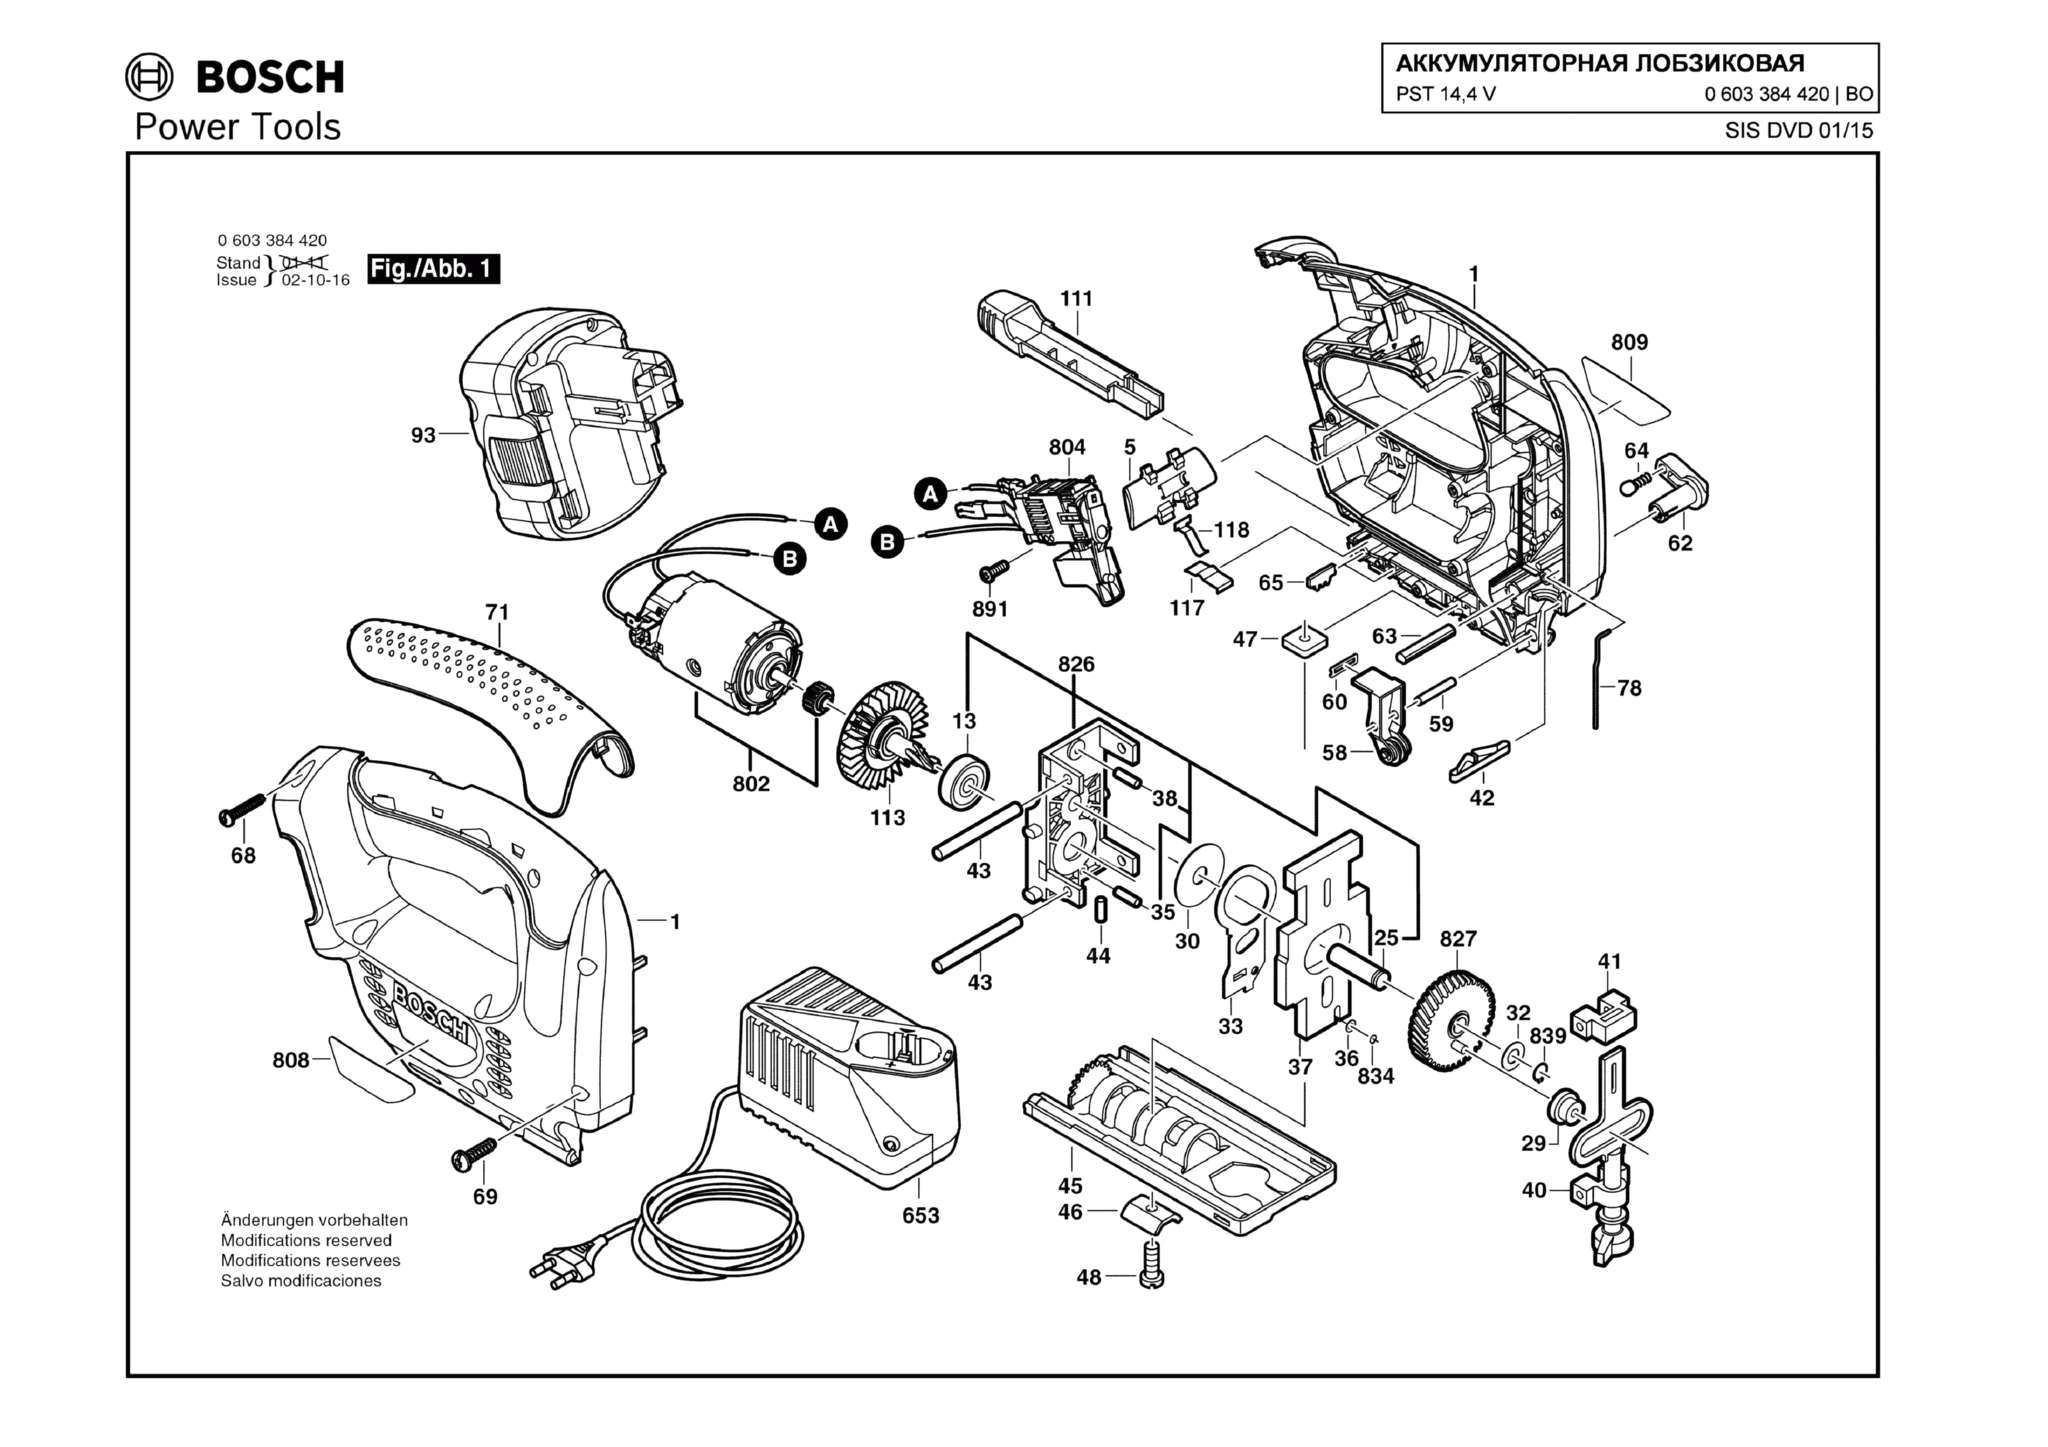 Запчасти, схема и деталировка Bosch PST 14,4 V (ТИП 0603384420)